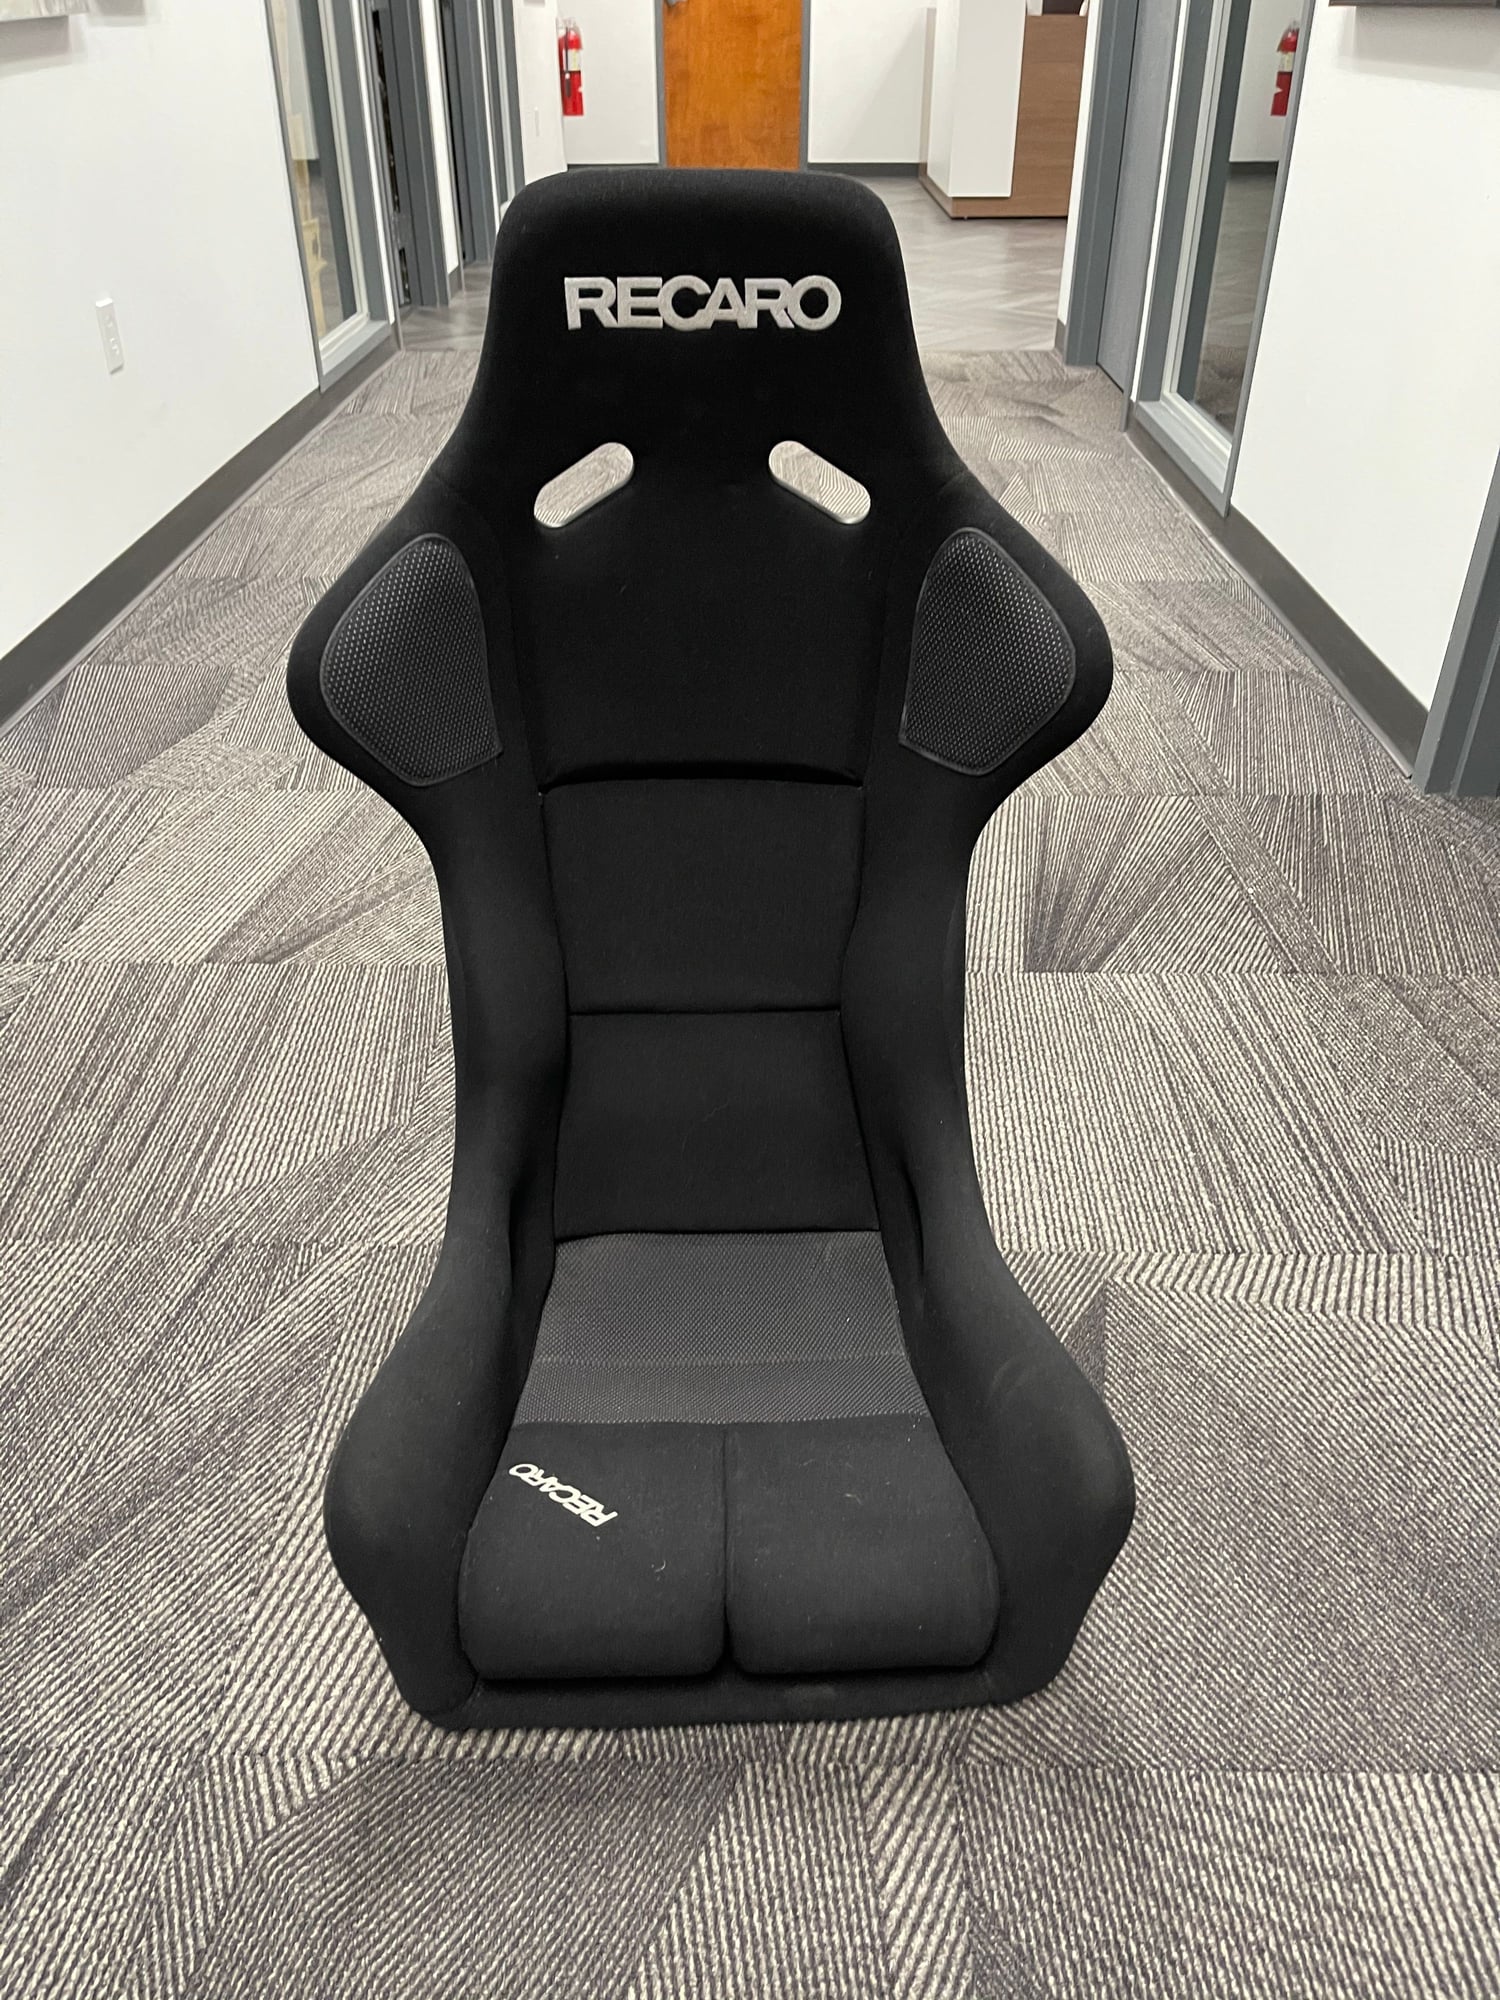 Interior/Upholstery - RECARO PROFI SPA CARBON KEVLAR SEAT & RECARO PROFI SPG BLK SEAT BUNDLE - Used - 2012 to 2016 Porsche Cayman - Orlando, FL 32807, United States